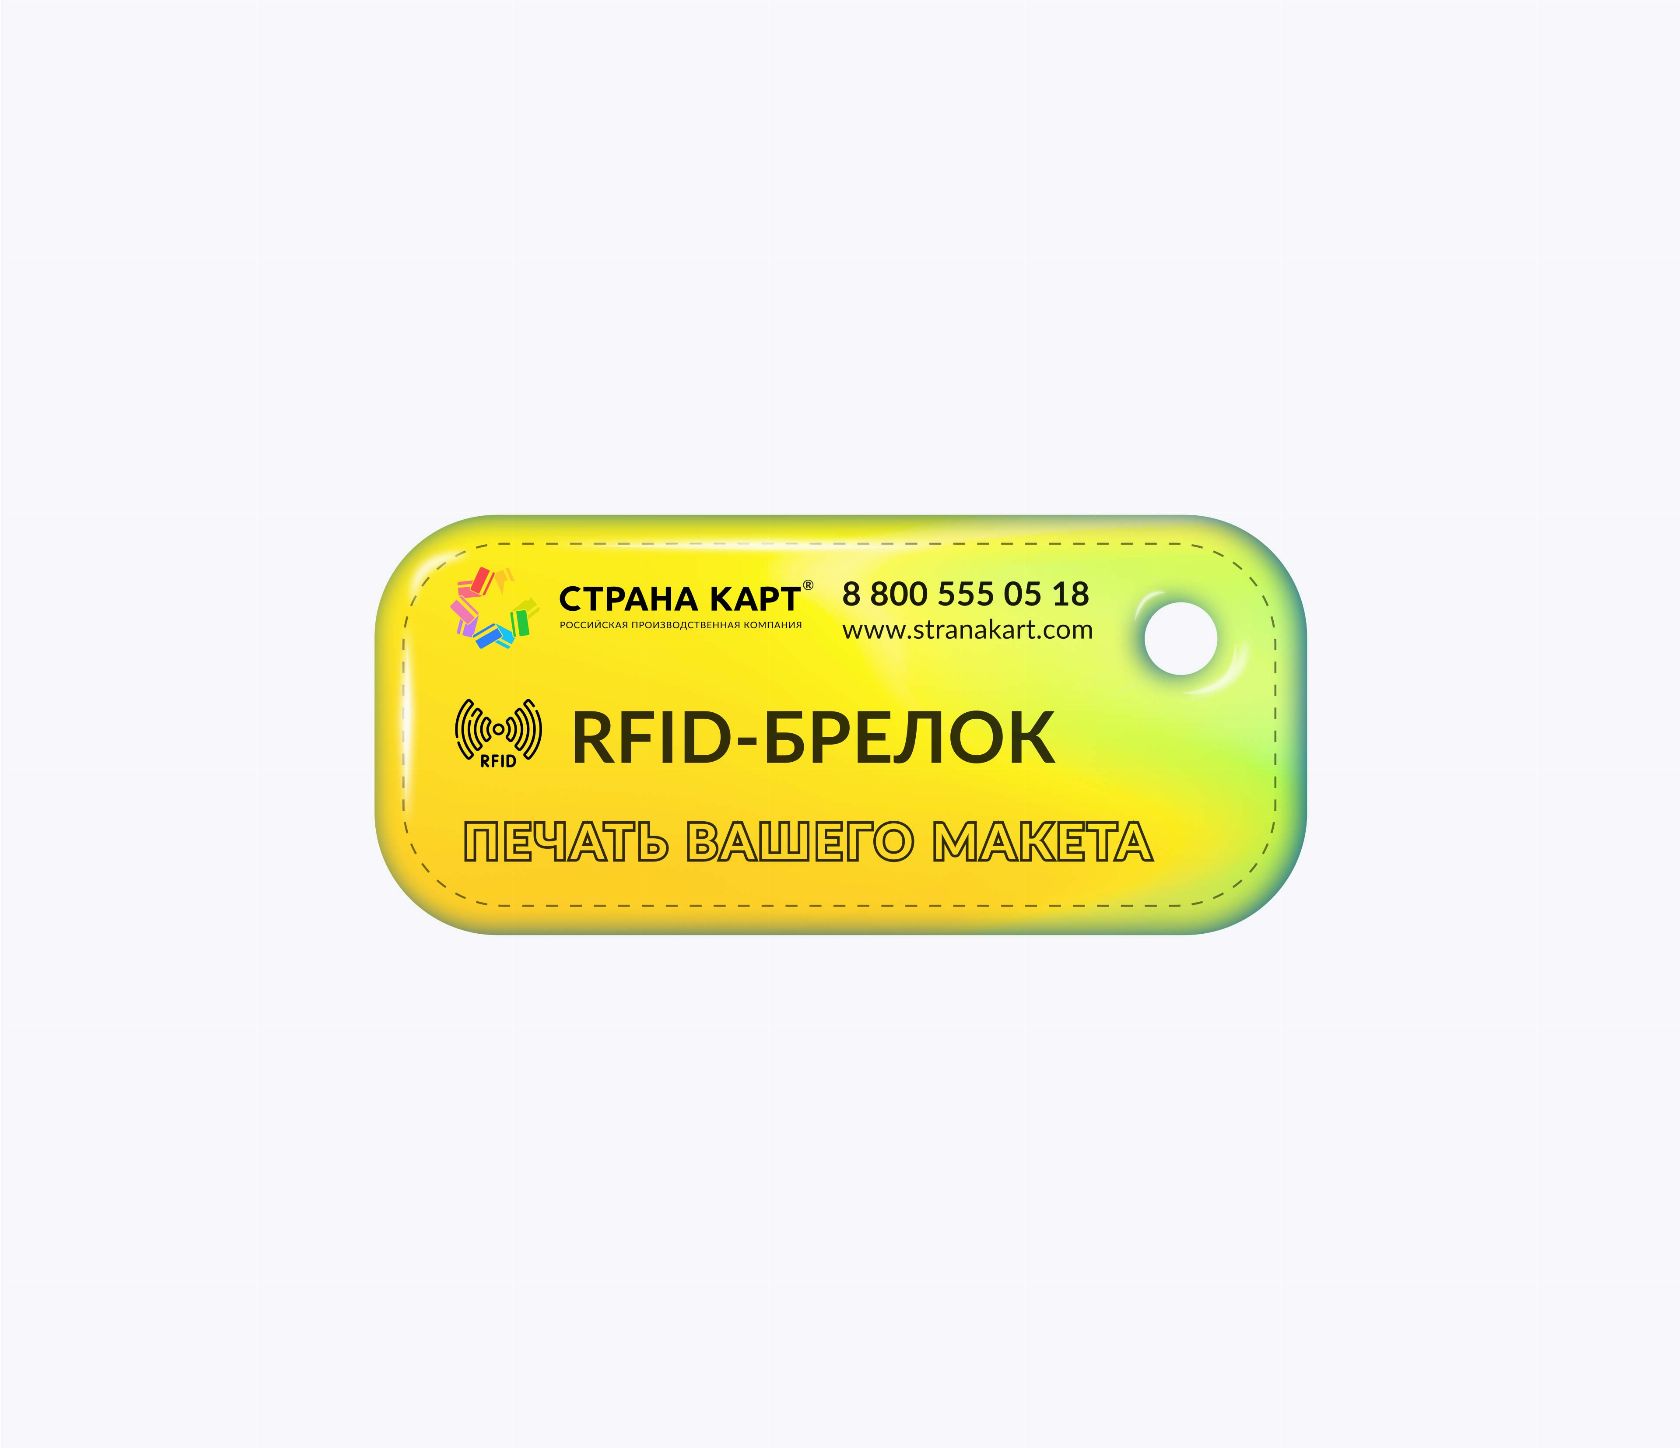 Прямоугольные мини RFID-брелоки NEOKEY® с чипом NXP MIFARE Plus S 2k 7 byte UID RFID-брелоки NEOKEY® с чипом NXP MIFARE Plus S 2k 7 byte UID и вашим логотипом